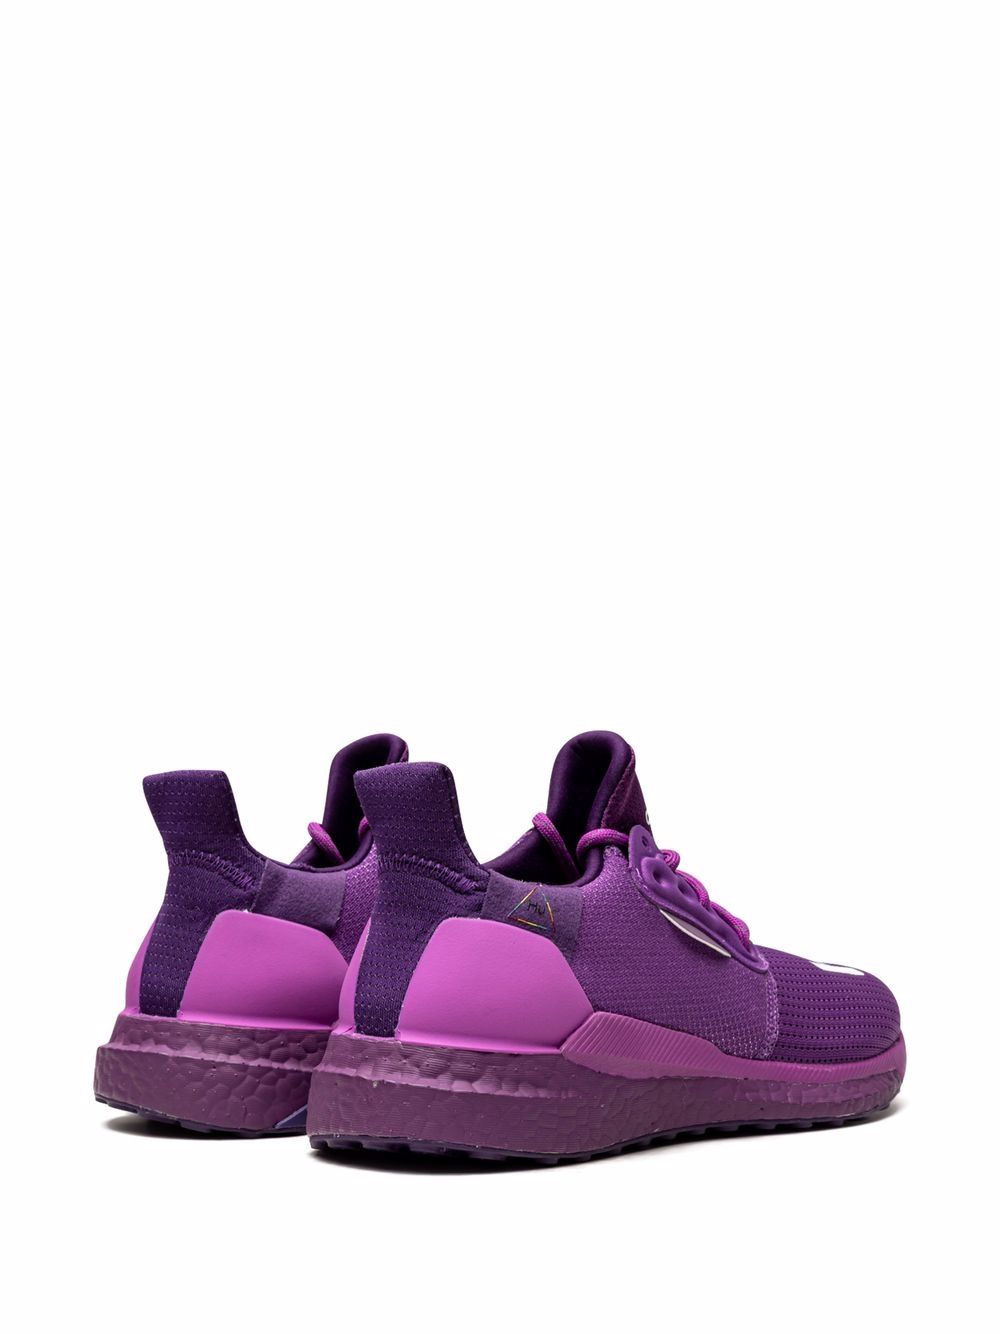 Pharrell Williams adidas Solar Hu Glide Purple EG7770 Release Date